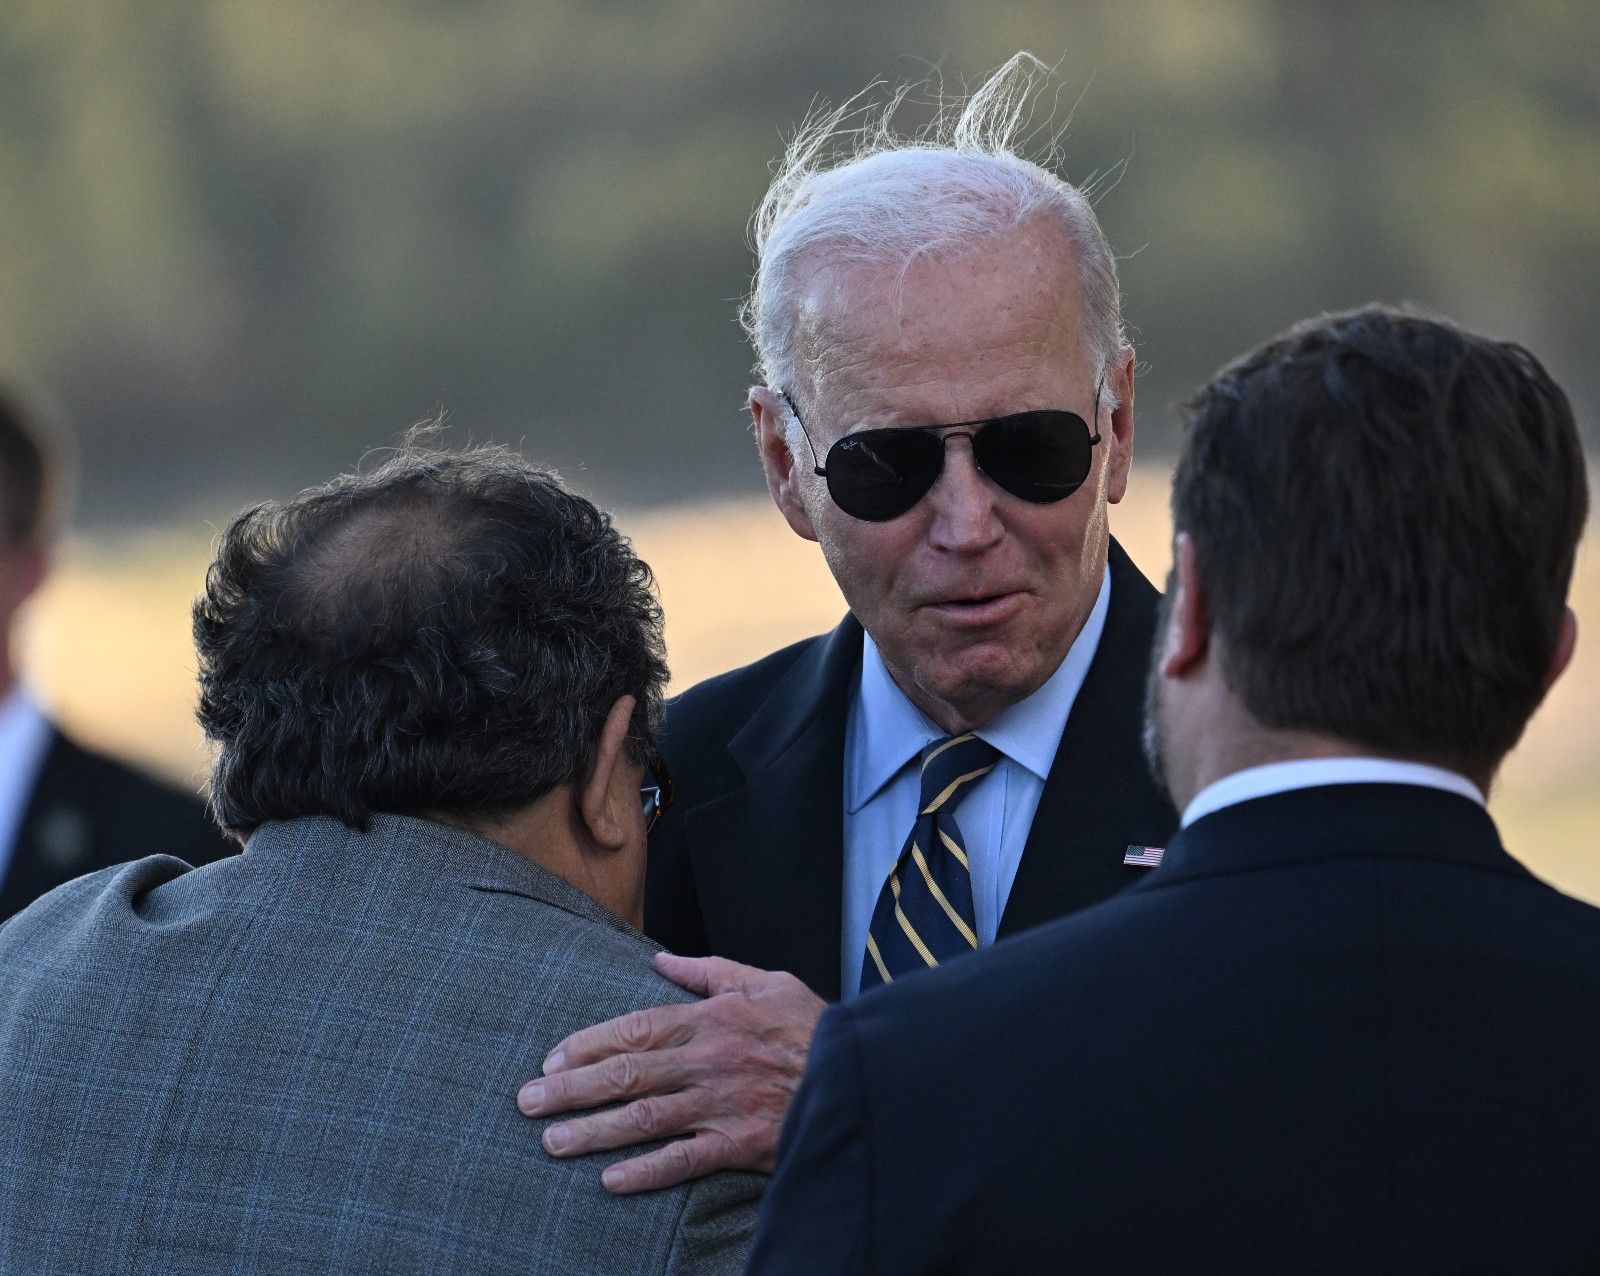 Biden, hug sunglasses